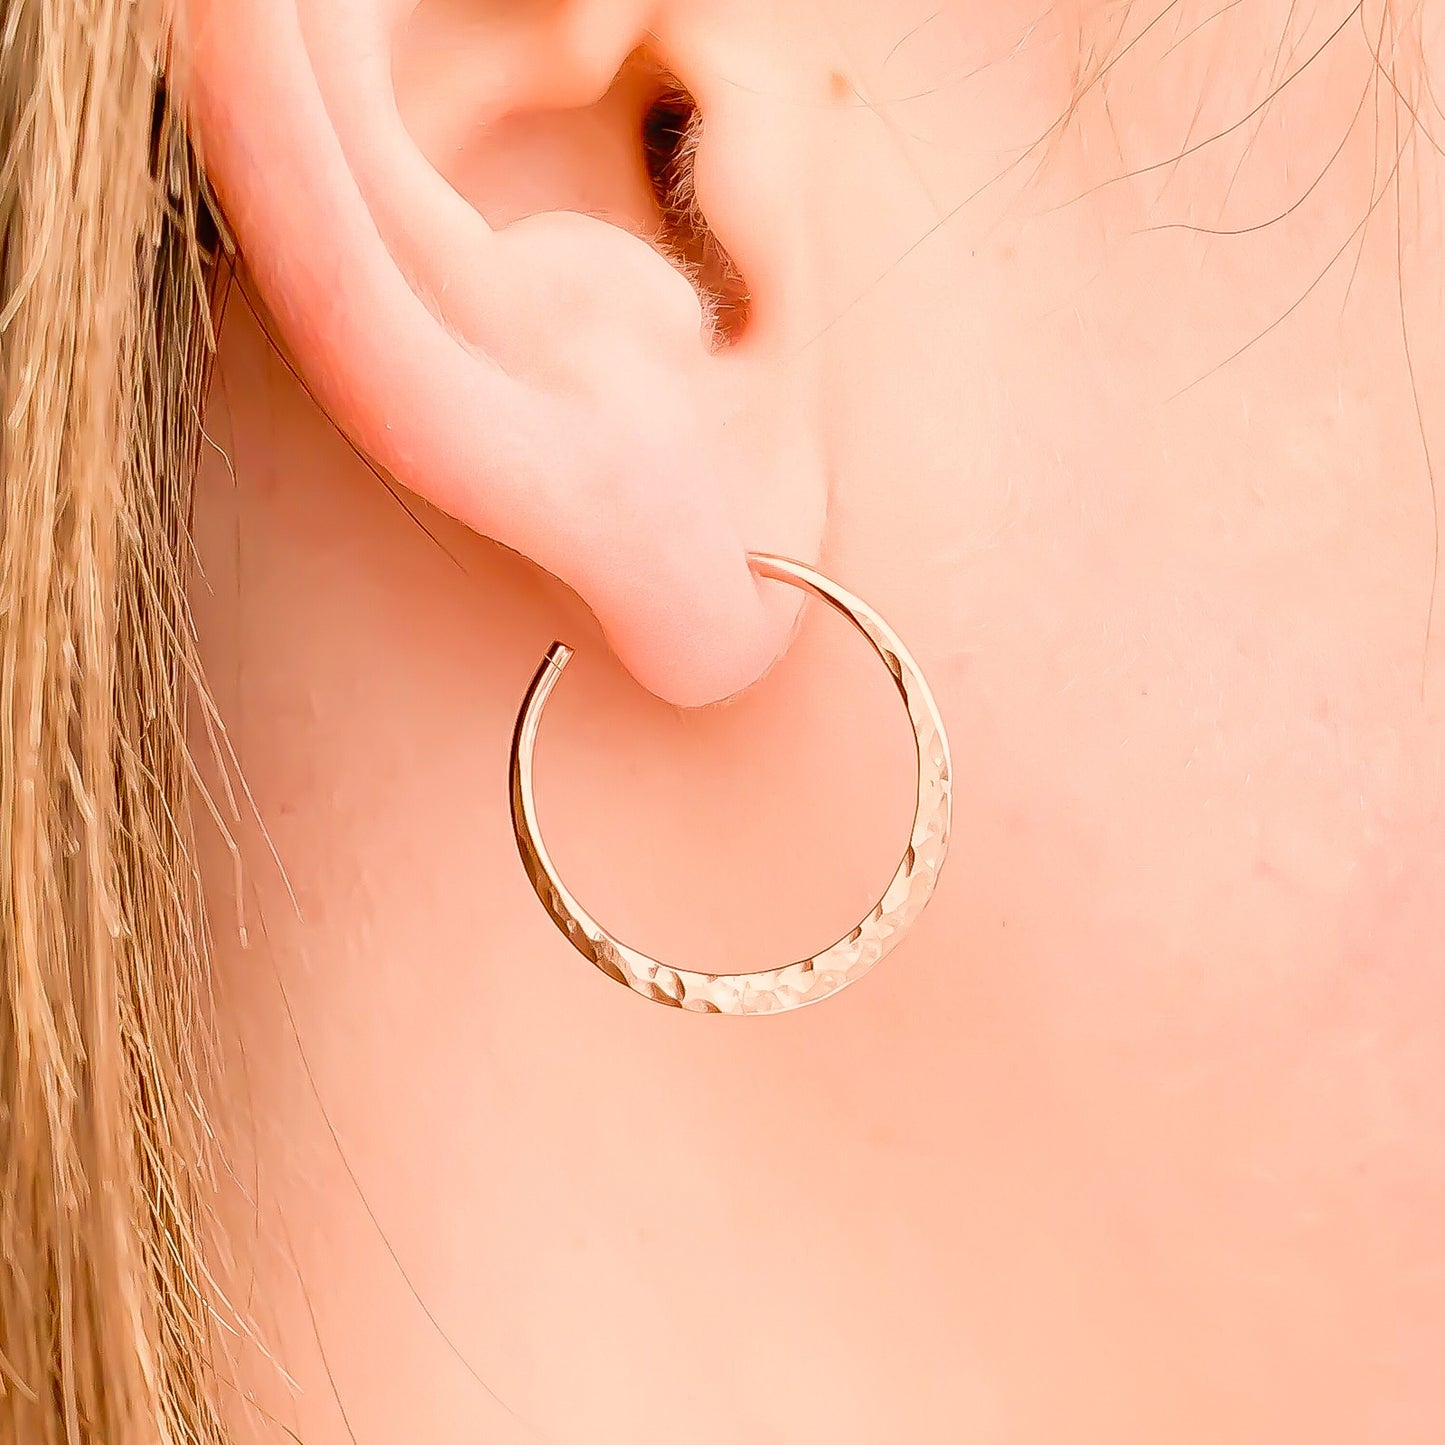 25mm Hammered Hoop Earrings, 14K Rose Gold Filled